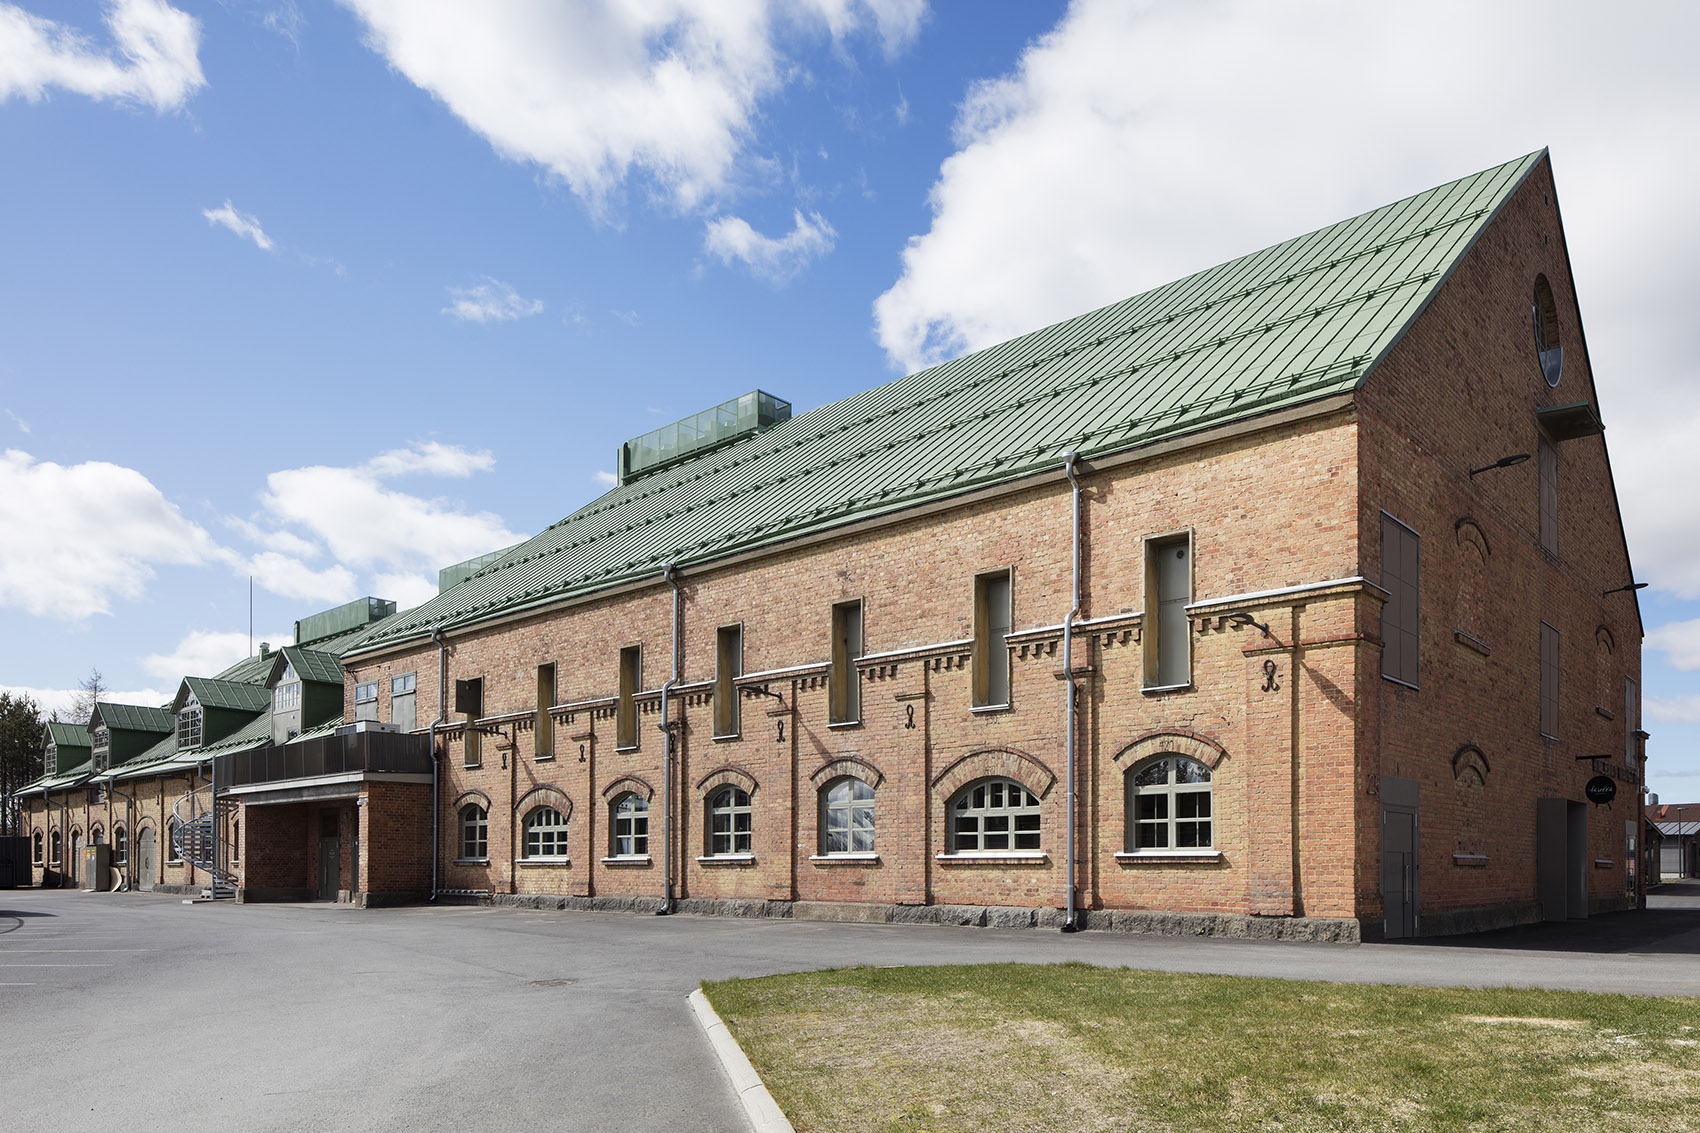 Kalevan Navetta文化艺术中心，芬兰/材料与结构的交响曲-60